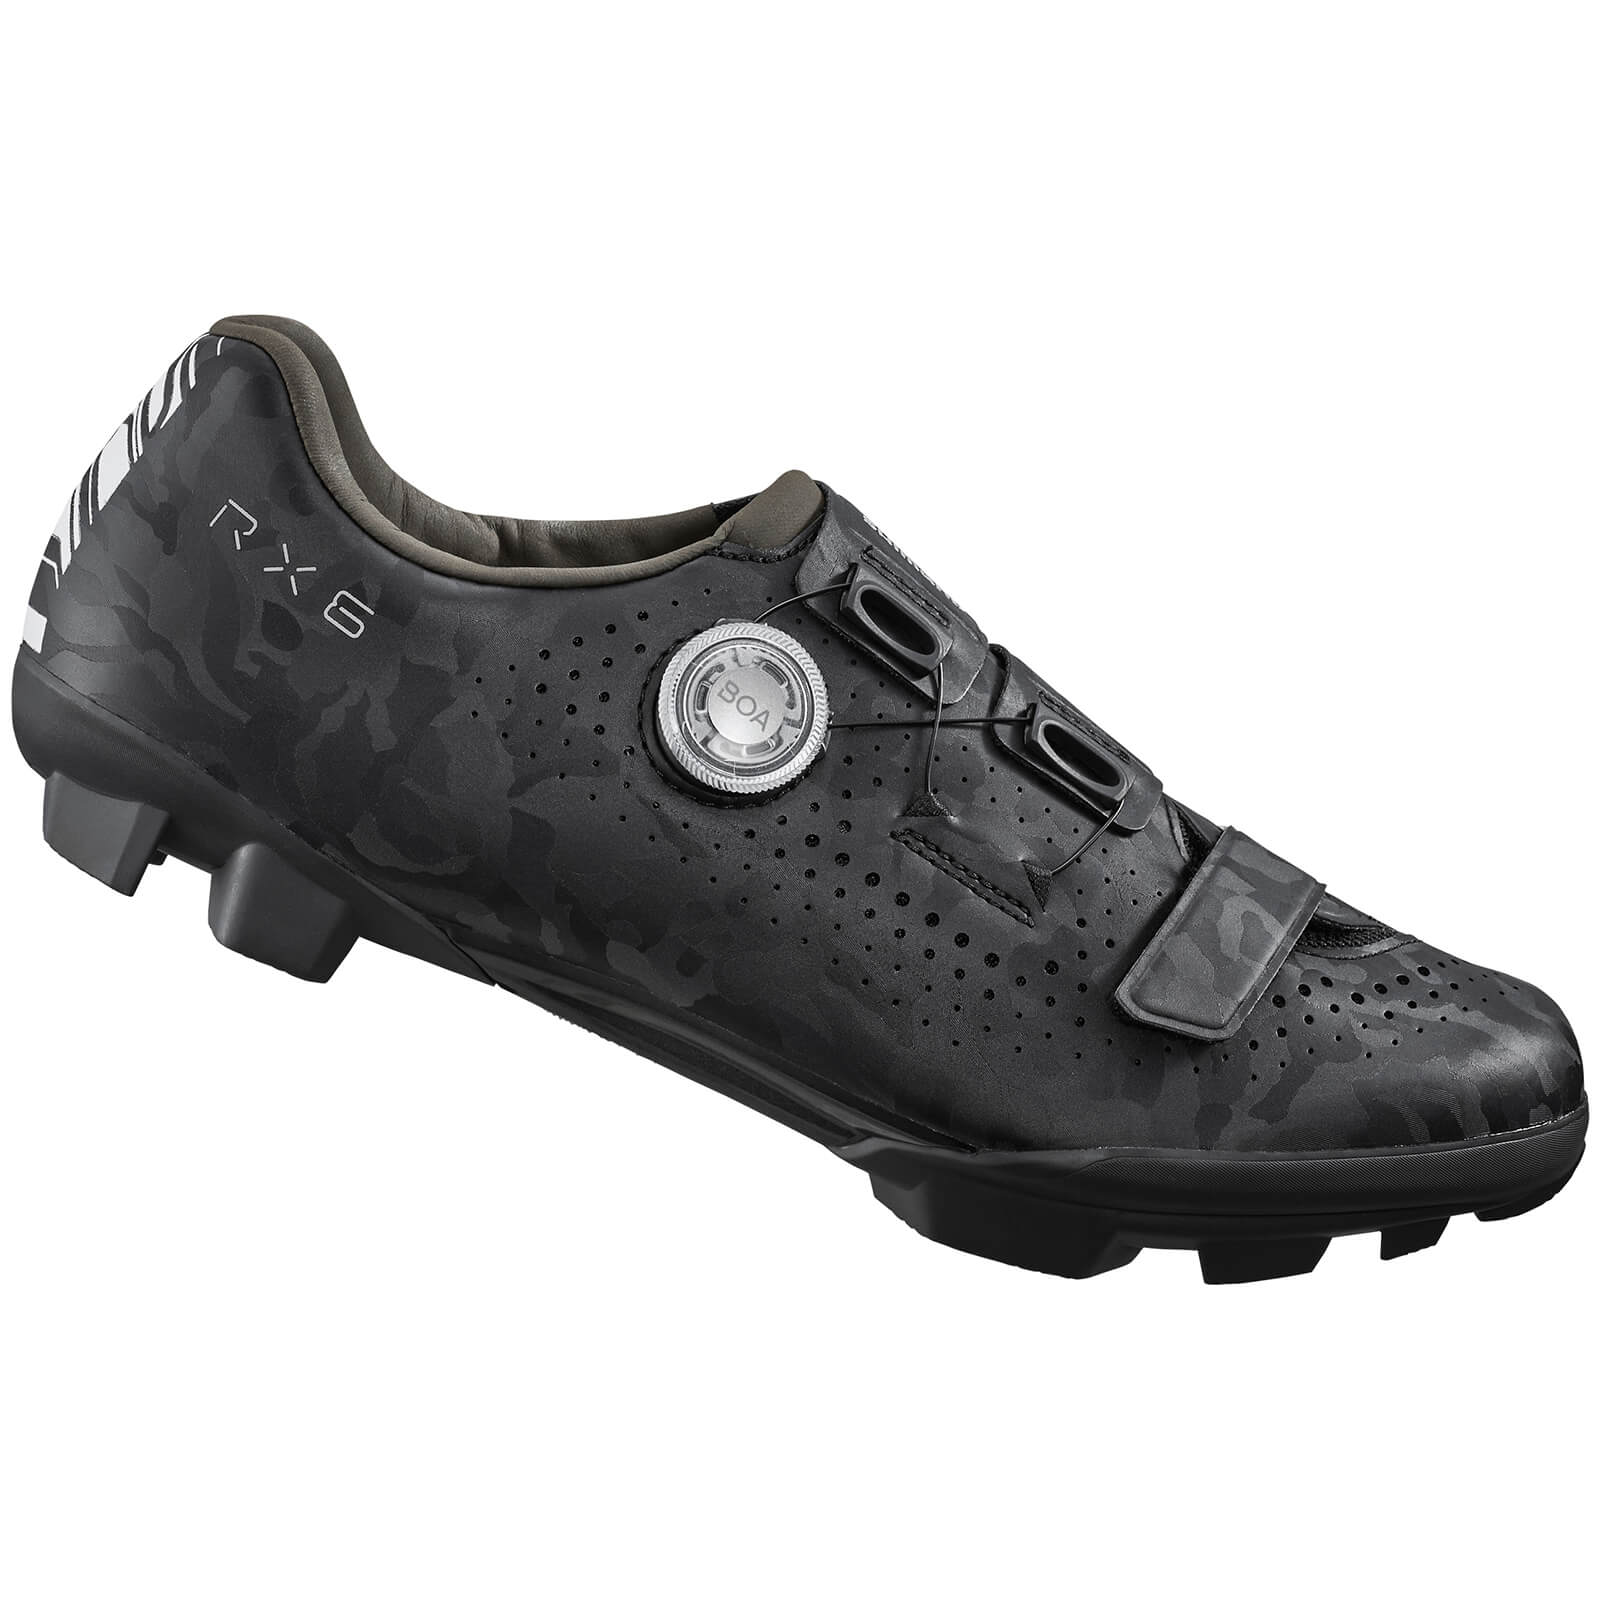 Shimano RX600 Gravel Cycling Shoes - 46 - Black